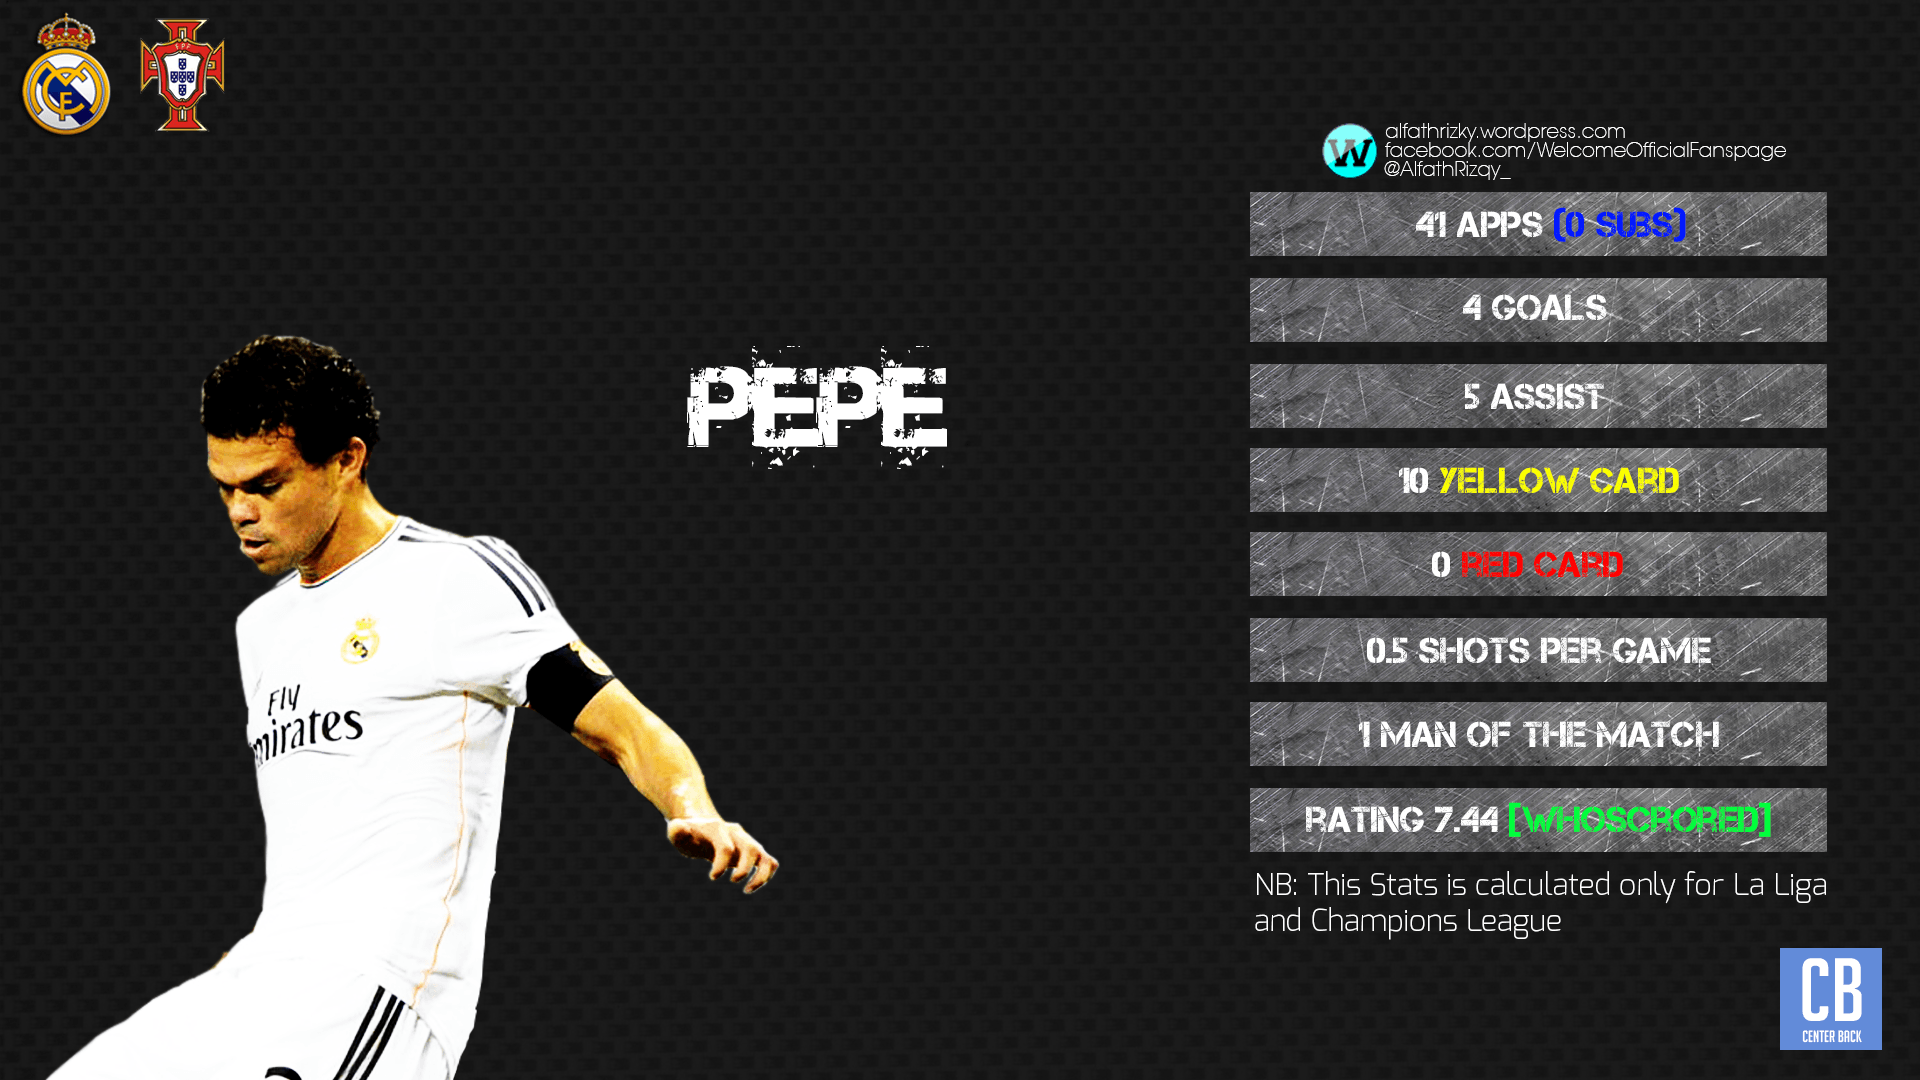 Pepe Wallpaper, Best & Inspirational High Quality Pepe